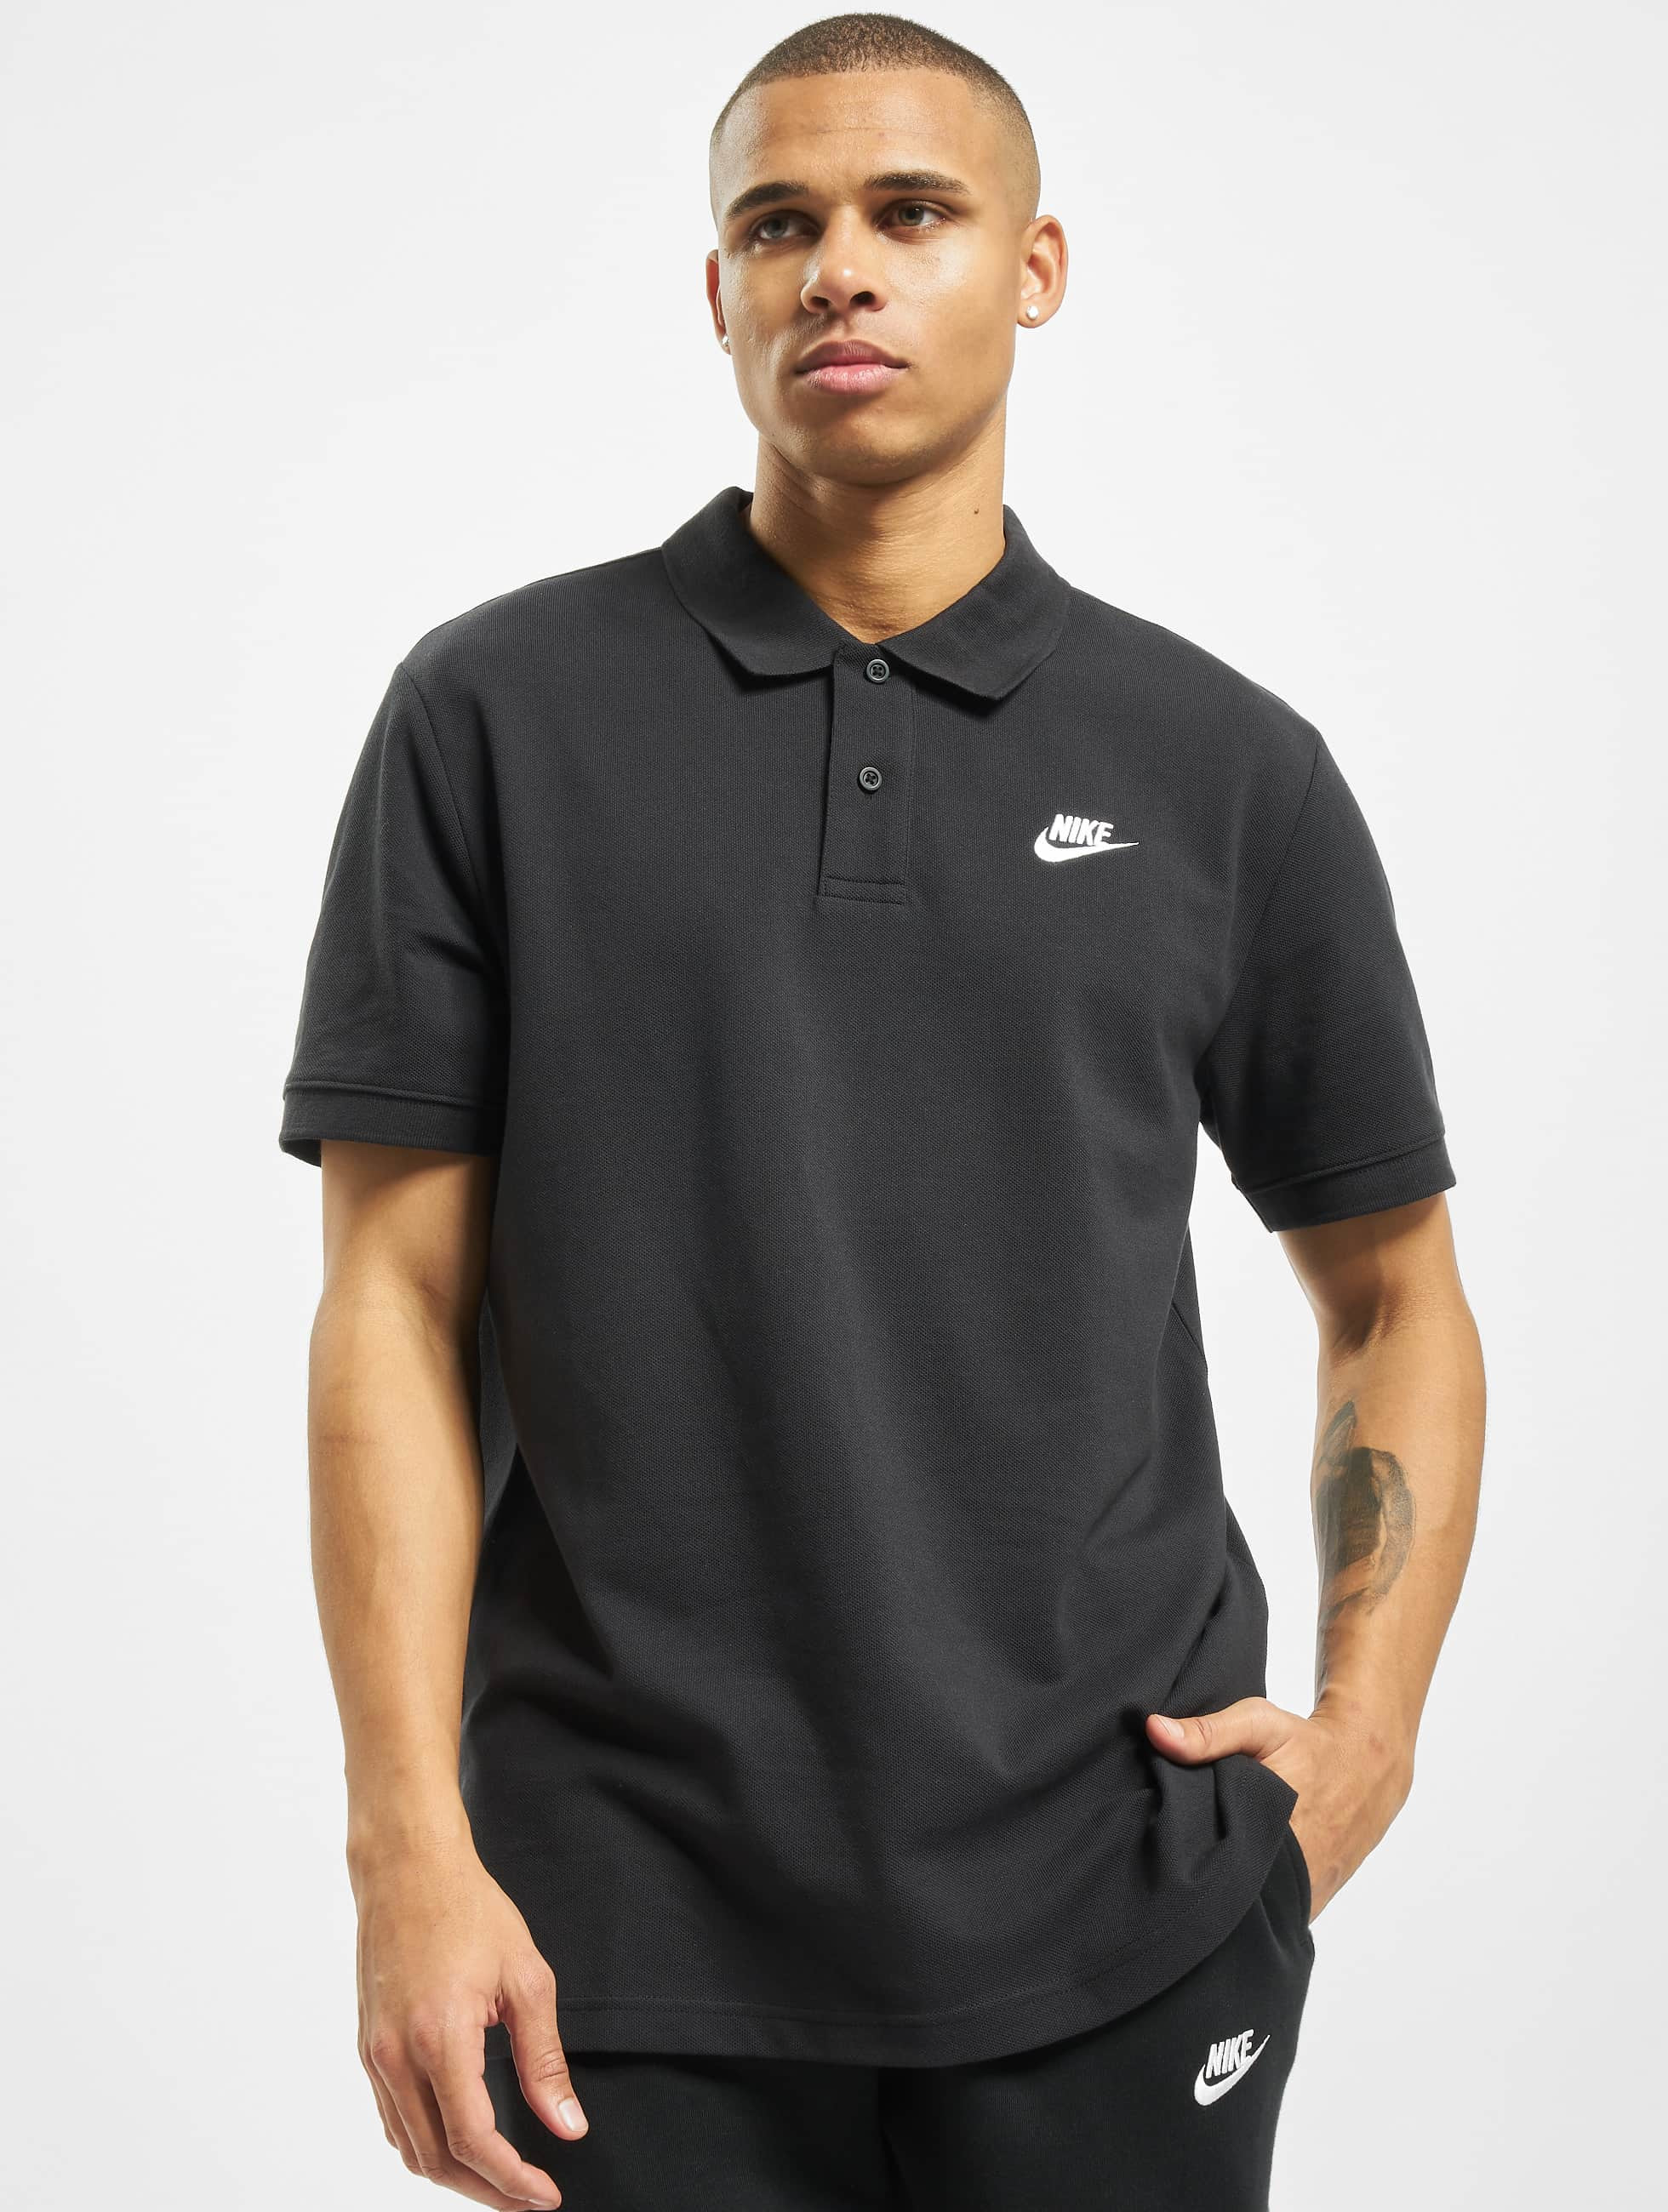 Wissen Bestrating havik Nike Herren Poloshirt Matchup Polo in schwarz 715070